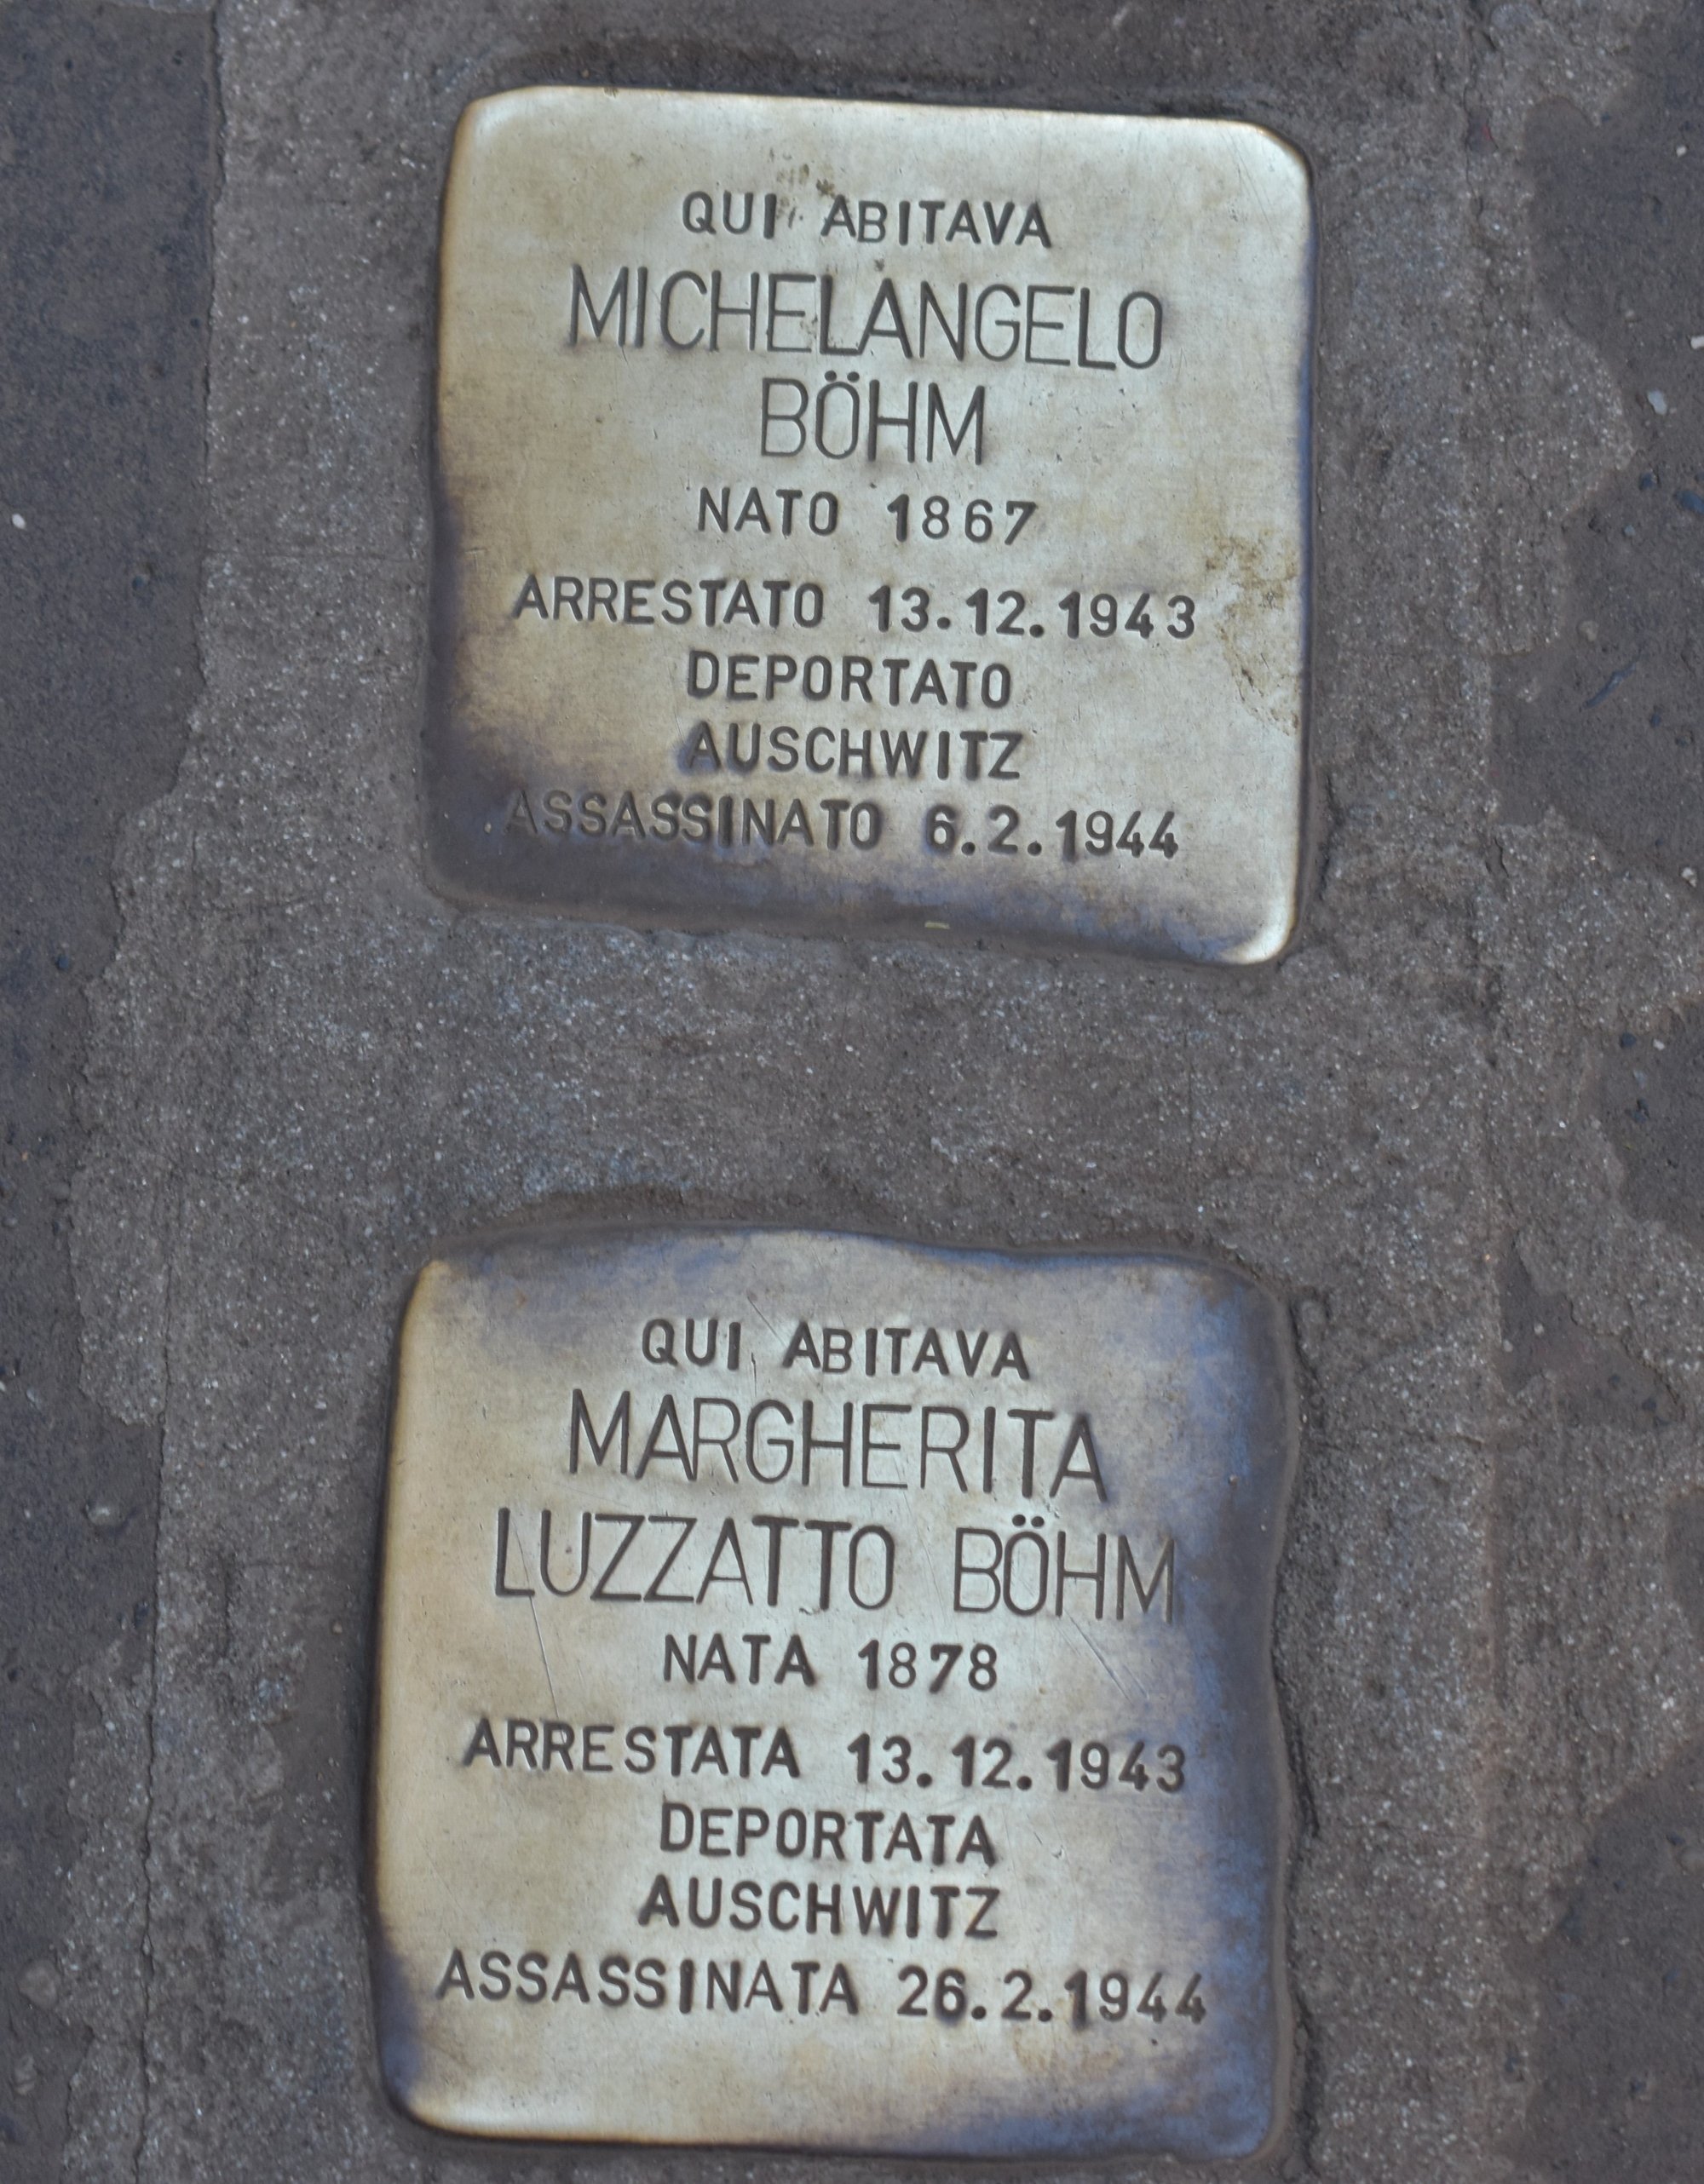 1& 2.Michelangelo Boehm and Margherita Luzzato Boehm, Via De Amicis 45